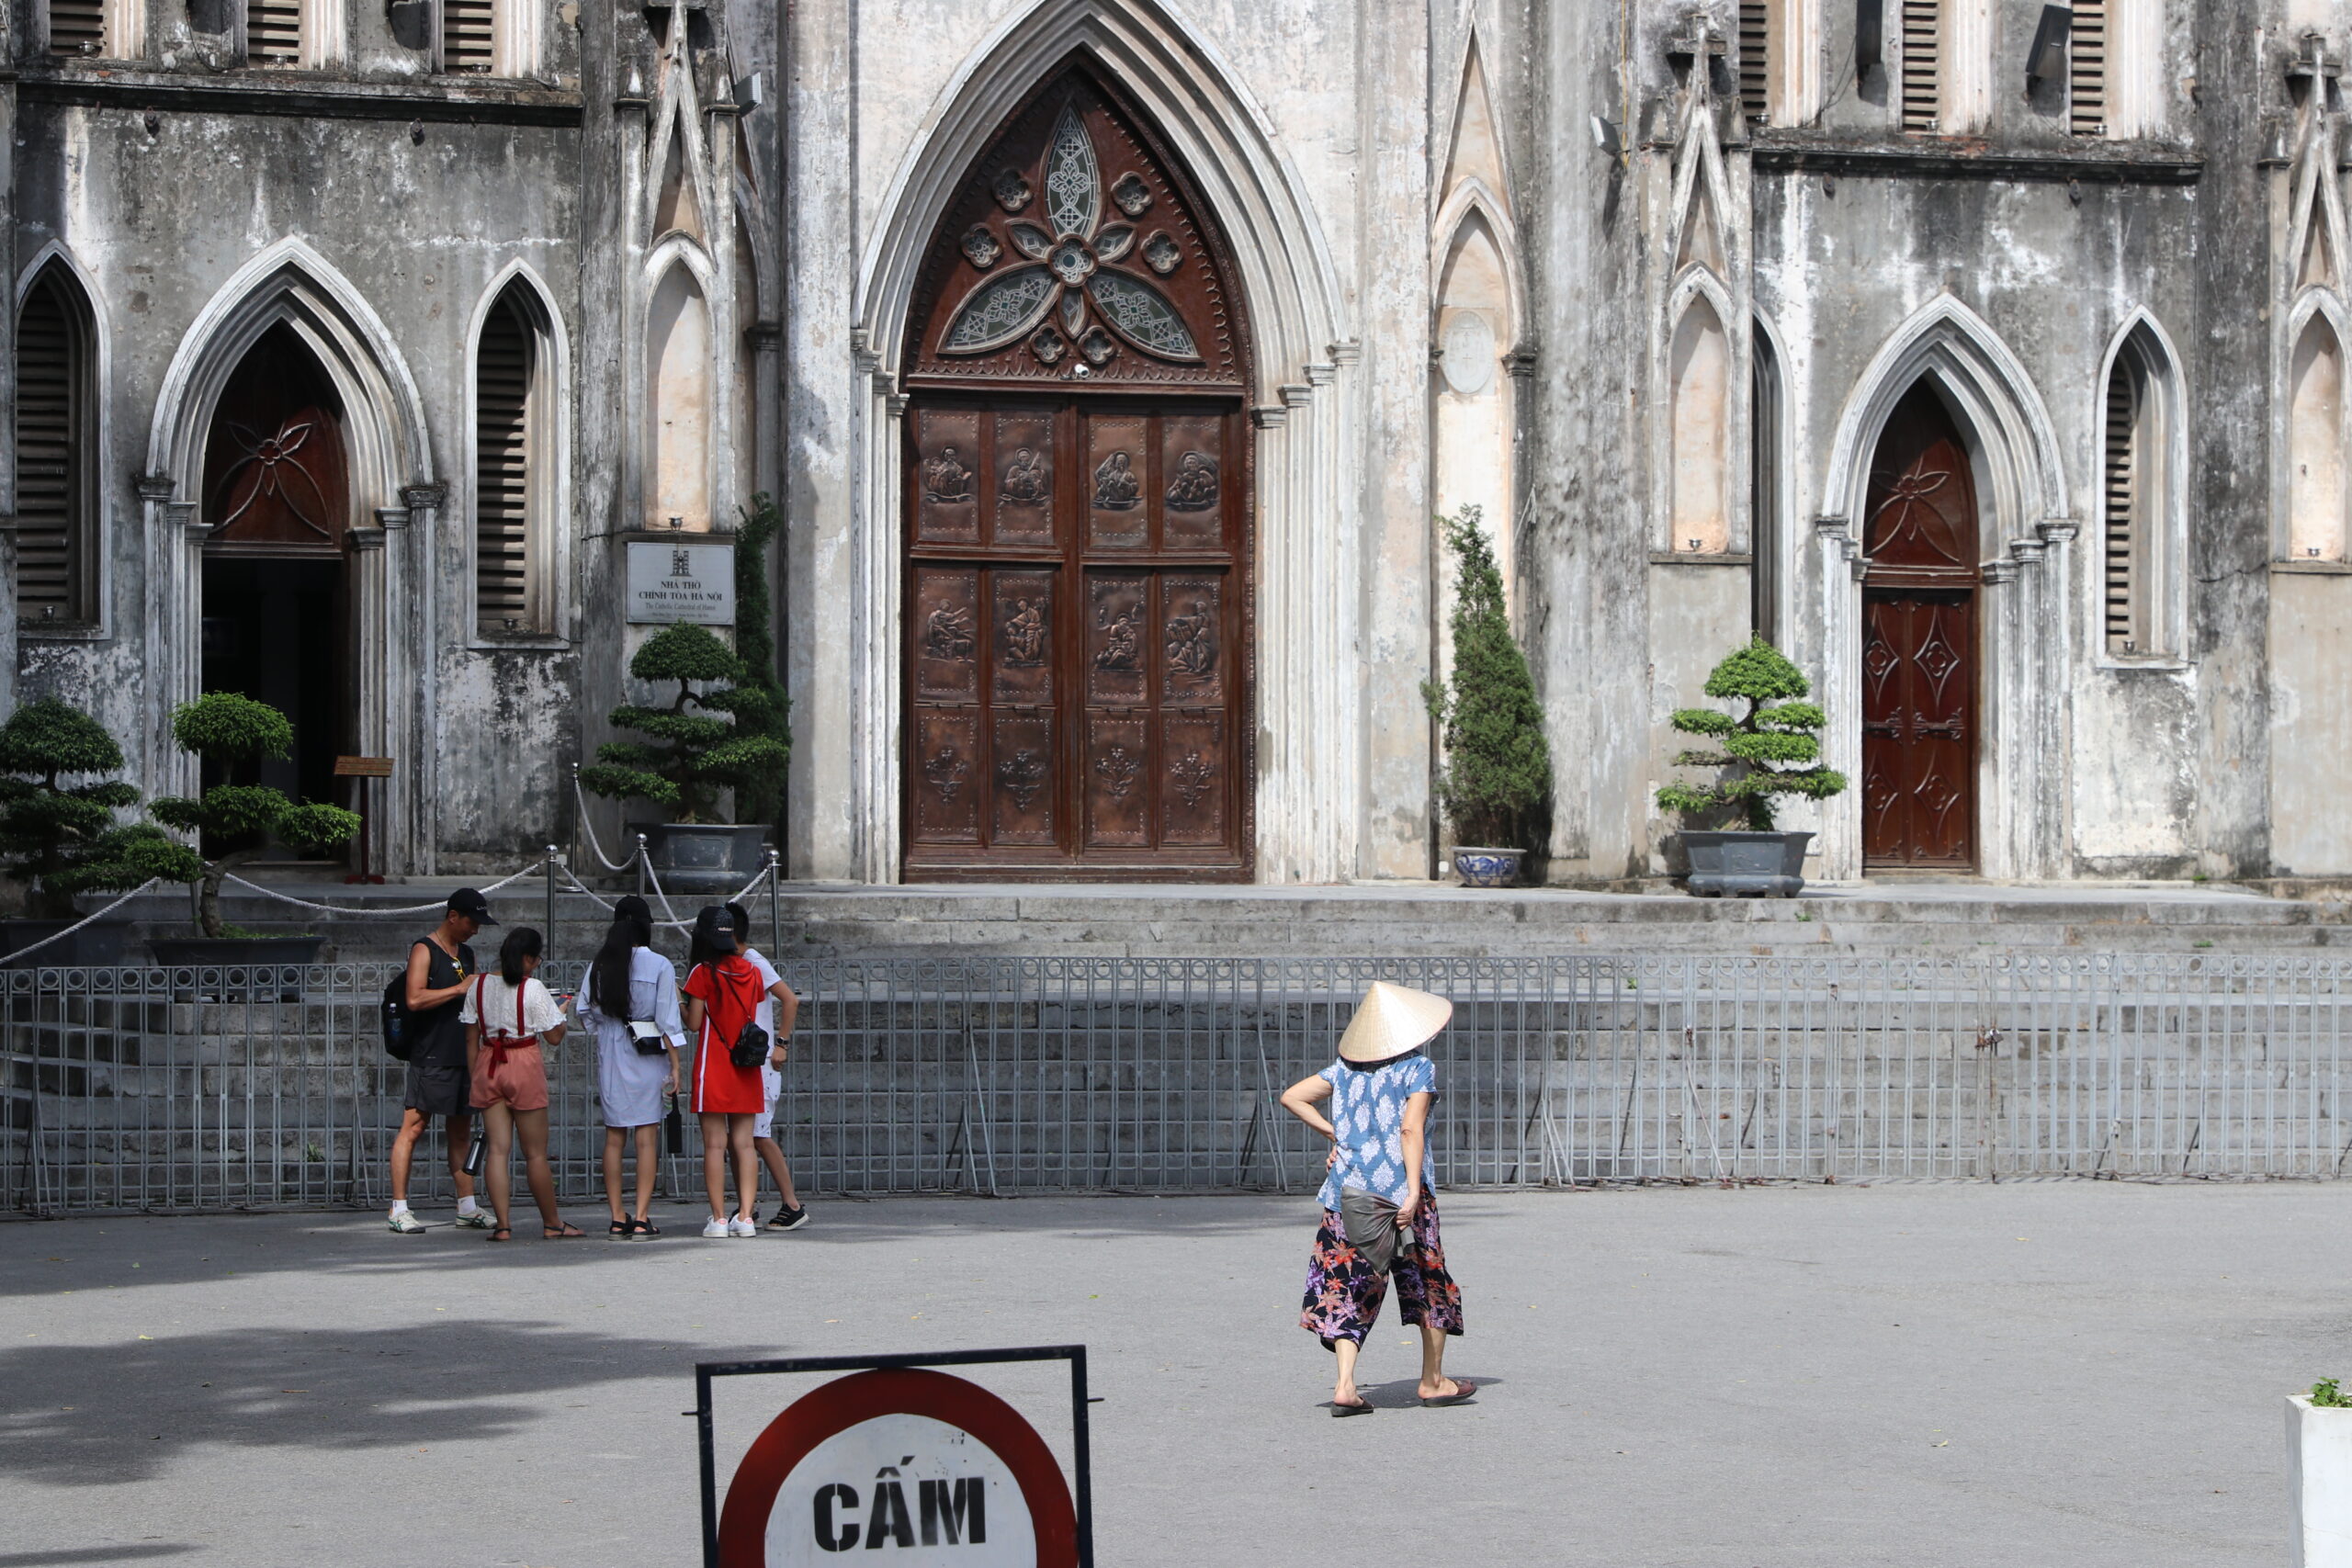 VIETNAM | APR. 28, 2023 — Harassed, Imprisoned for Christ